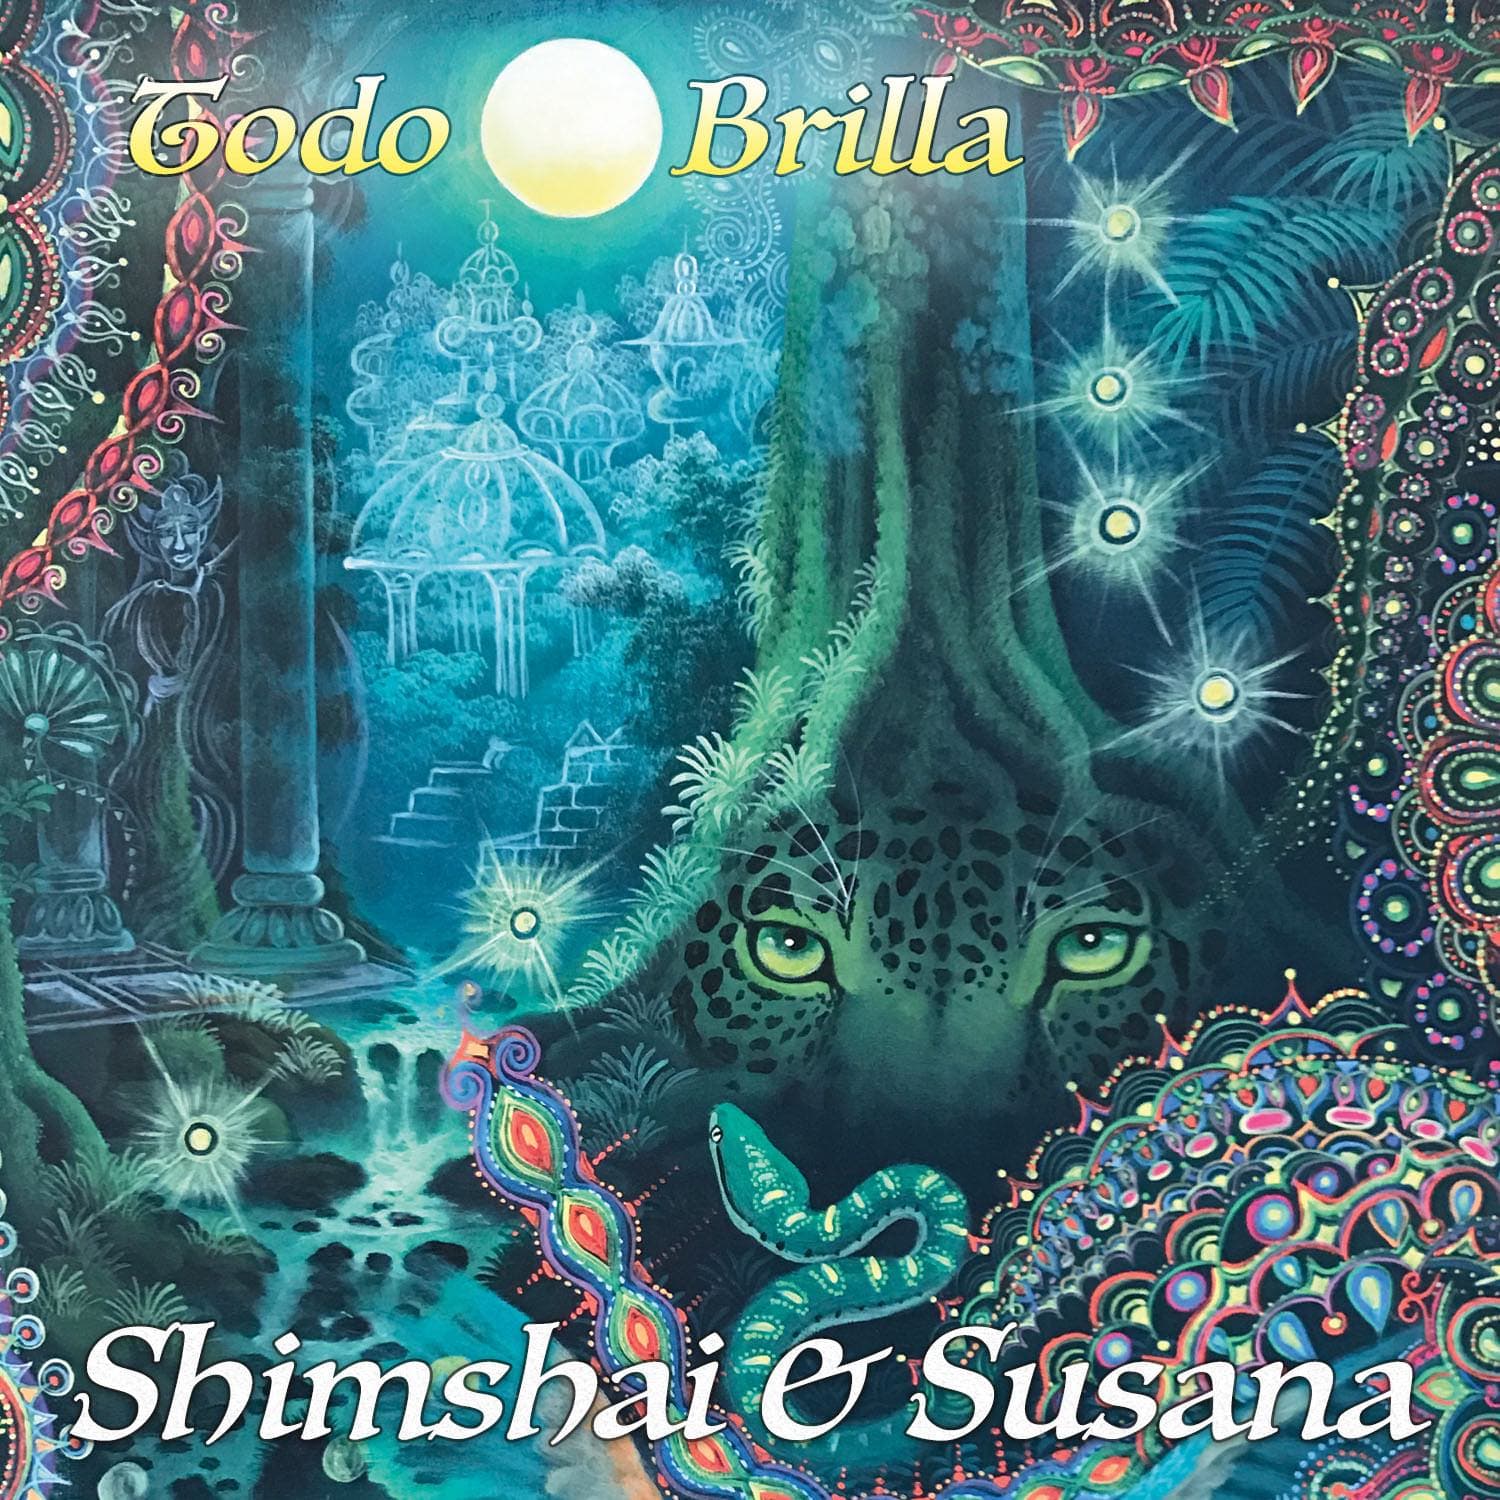 Todo Brilla, second medicine music studio album by Shimshai & Susana weaving songs from the Indeginous Amazon Icaros to traditional Mexico and Moondance folk music. 